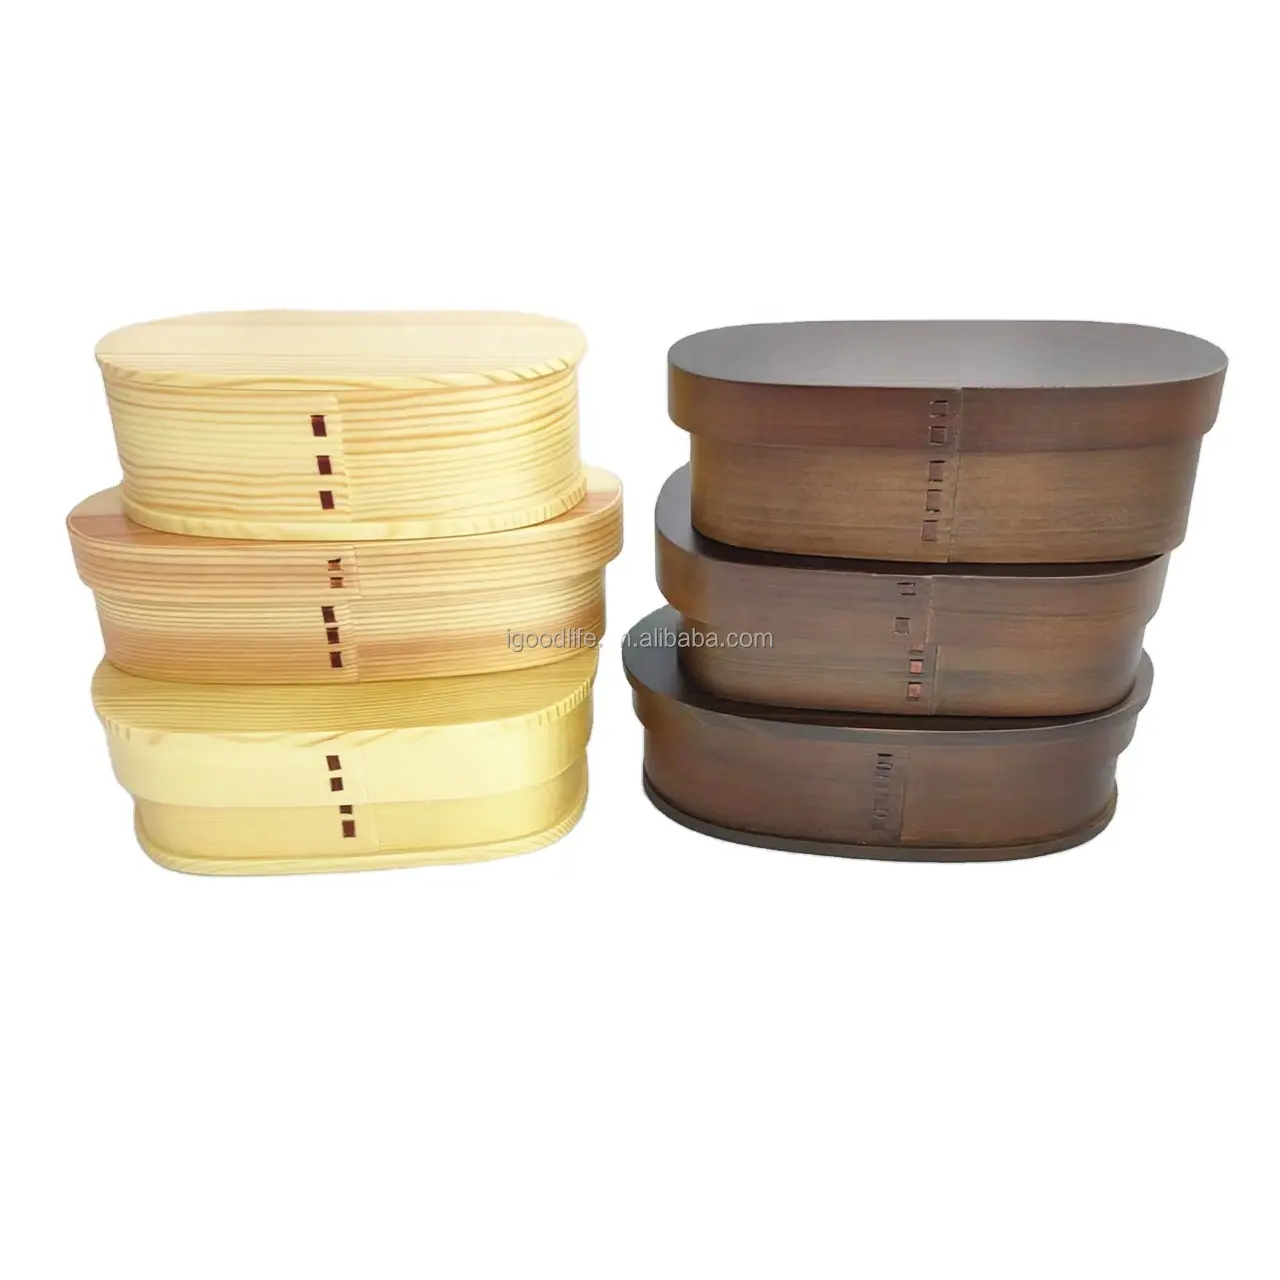 Kotak makan siang Bento kayu multifungsi, rak penyimpanan kanvas dan sedotan untuk rumah atau kamar mandi, rak penyimpanan pakaian